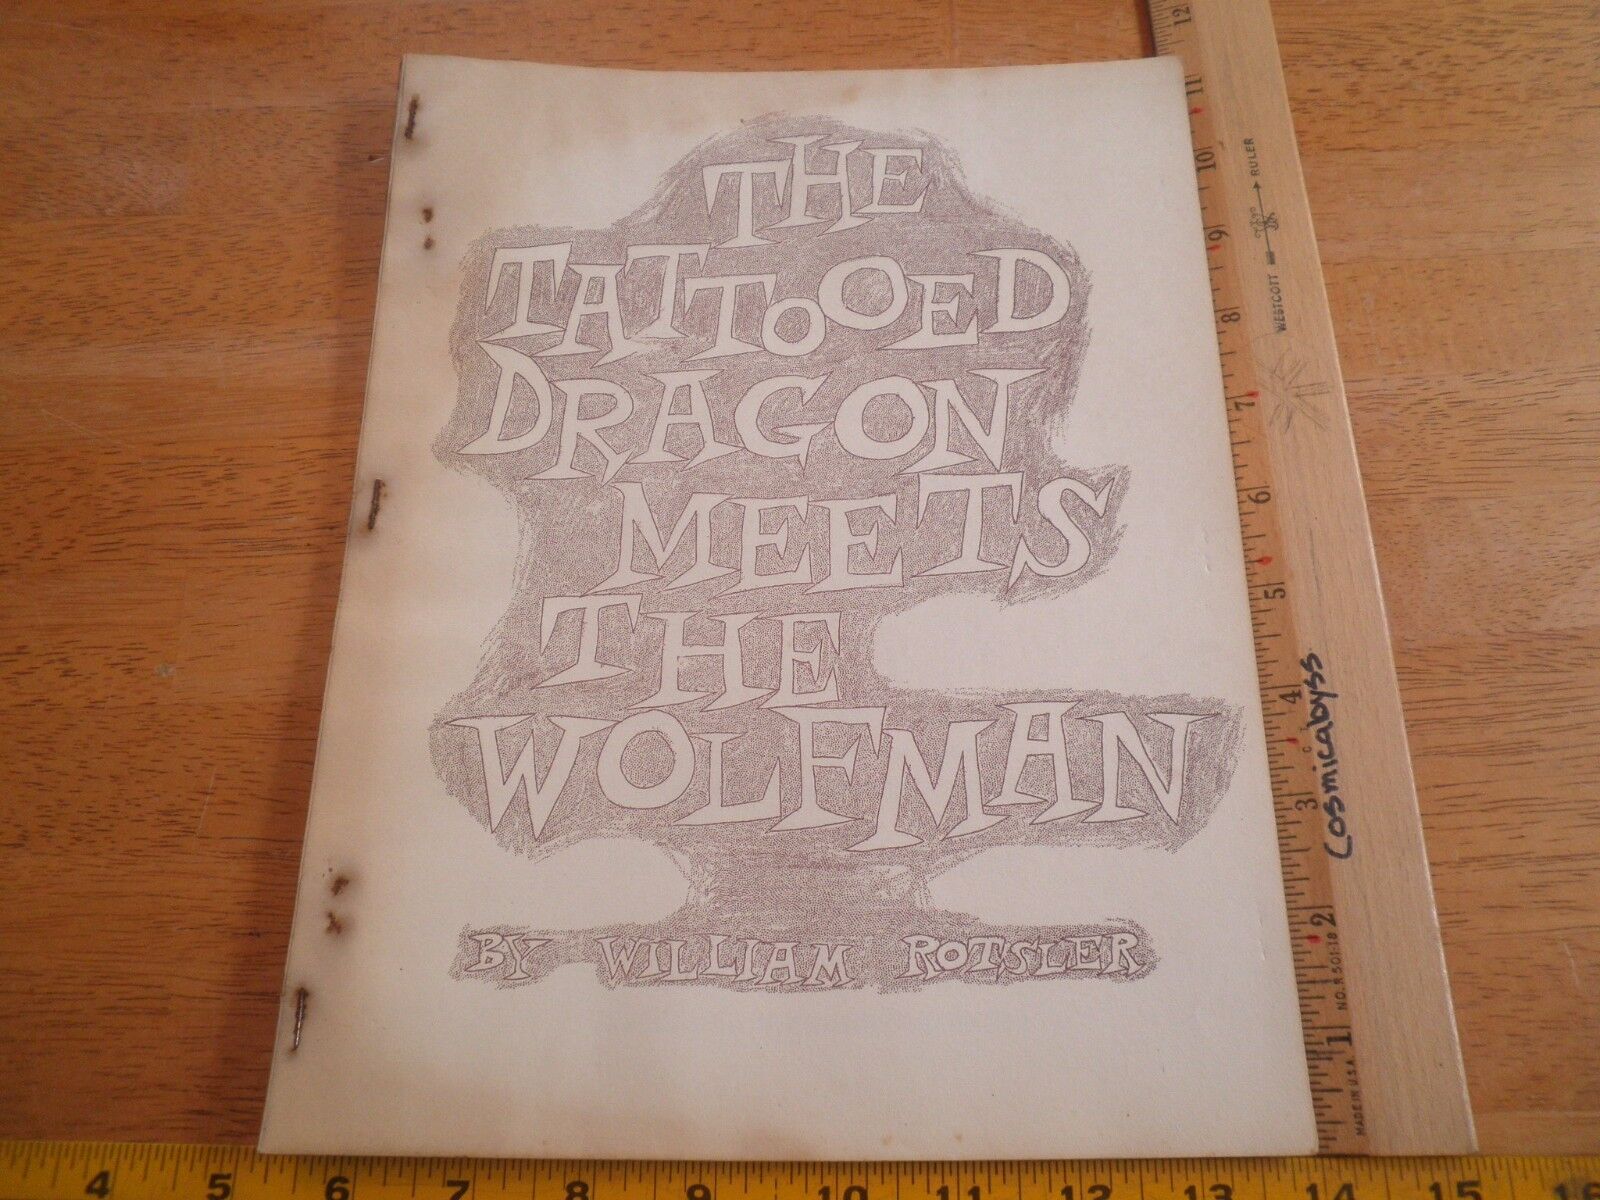 The Tattooed Dragon Meets the Wolfman William Rotsler 1960 book magazine RARE